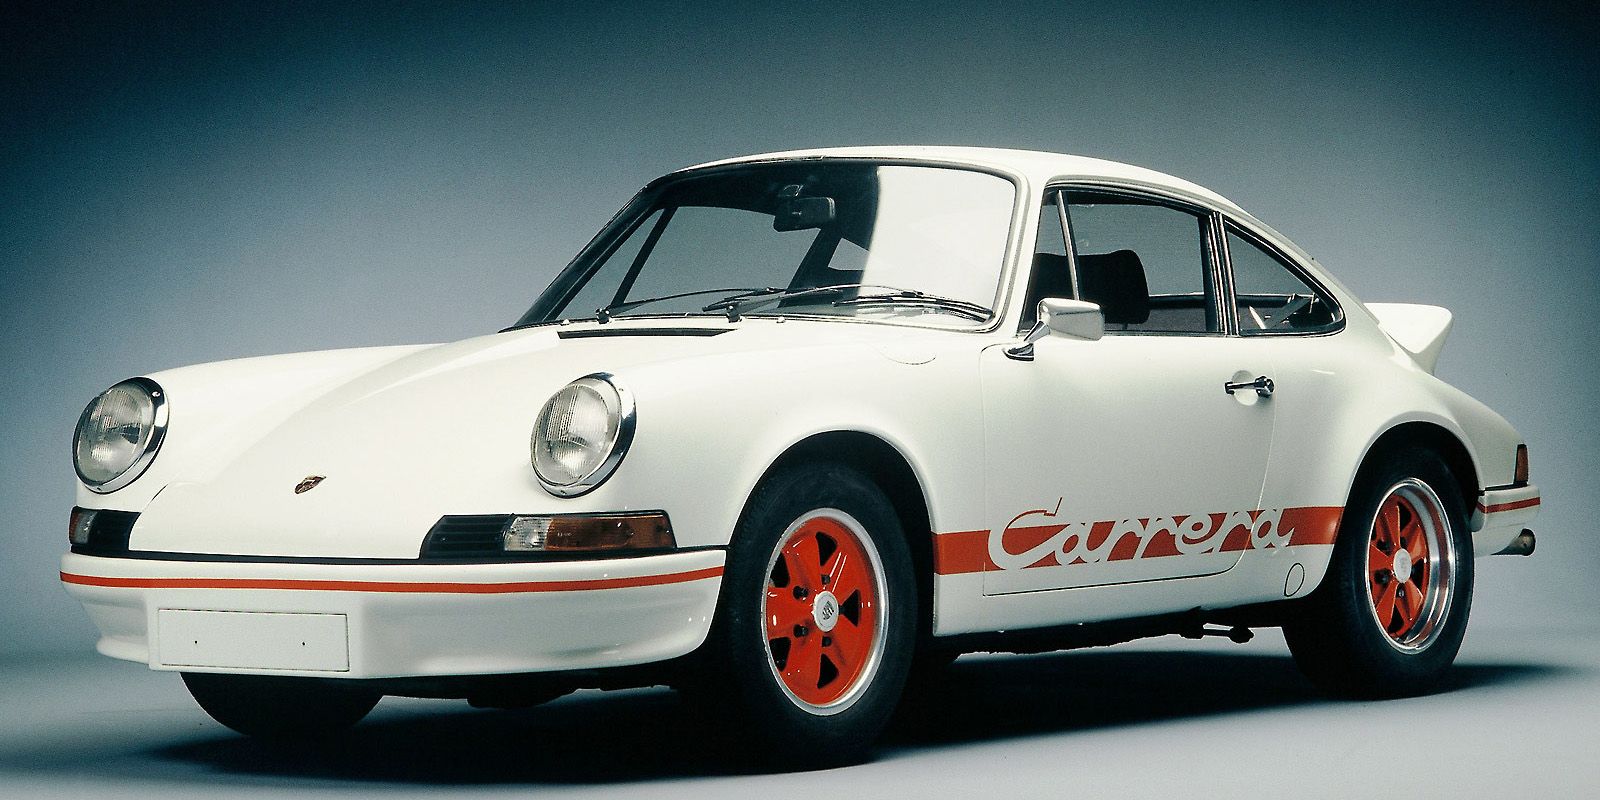 Porsche 911 History - 40+ Facts About the Legendary Porsche 911